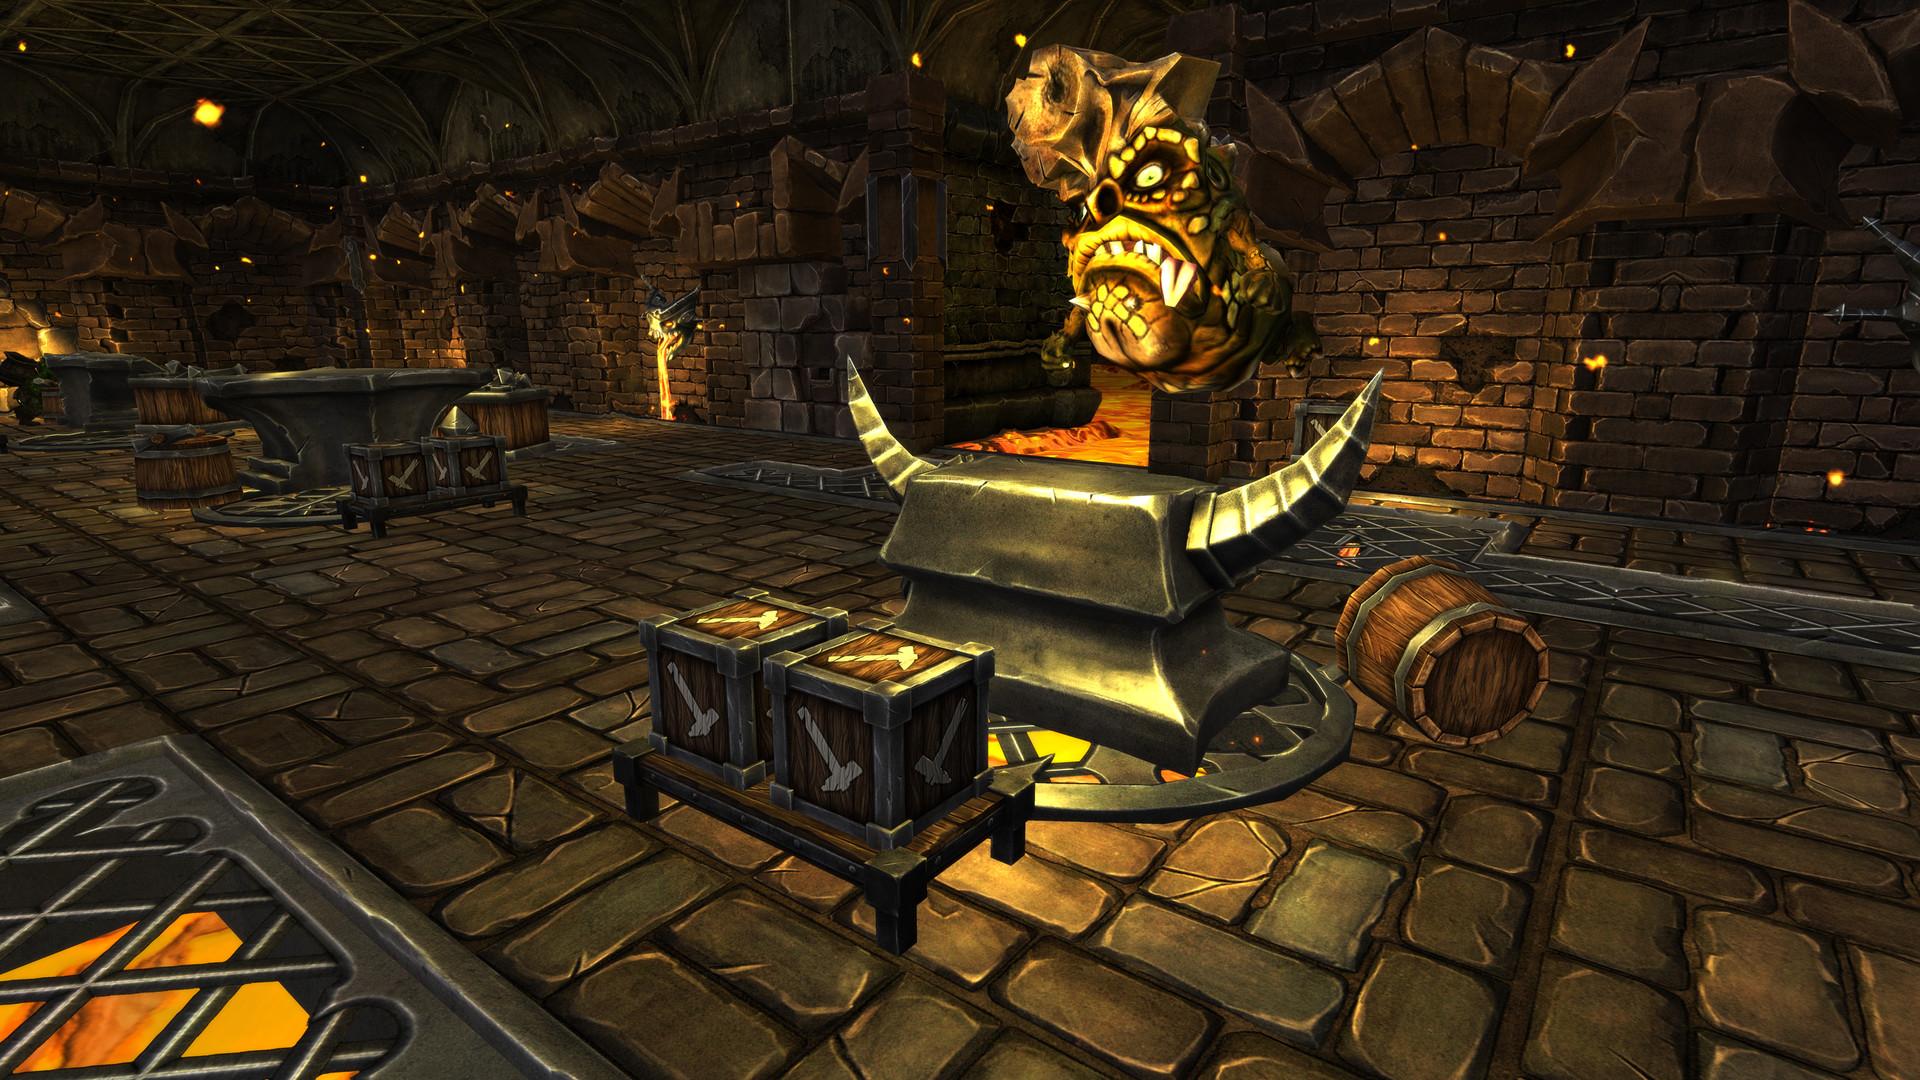 Screenshot №15 from game War for the Overworld